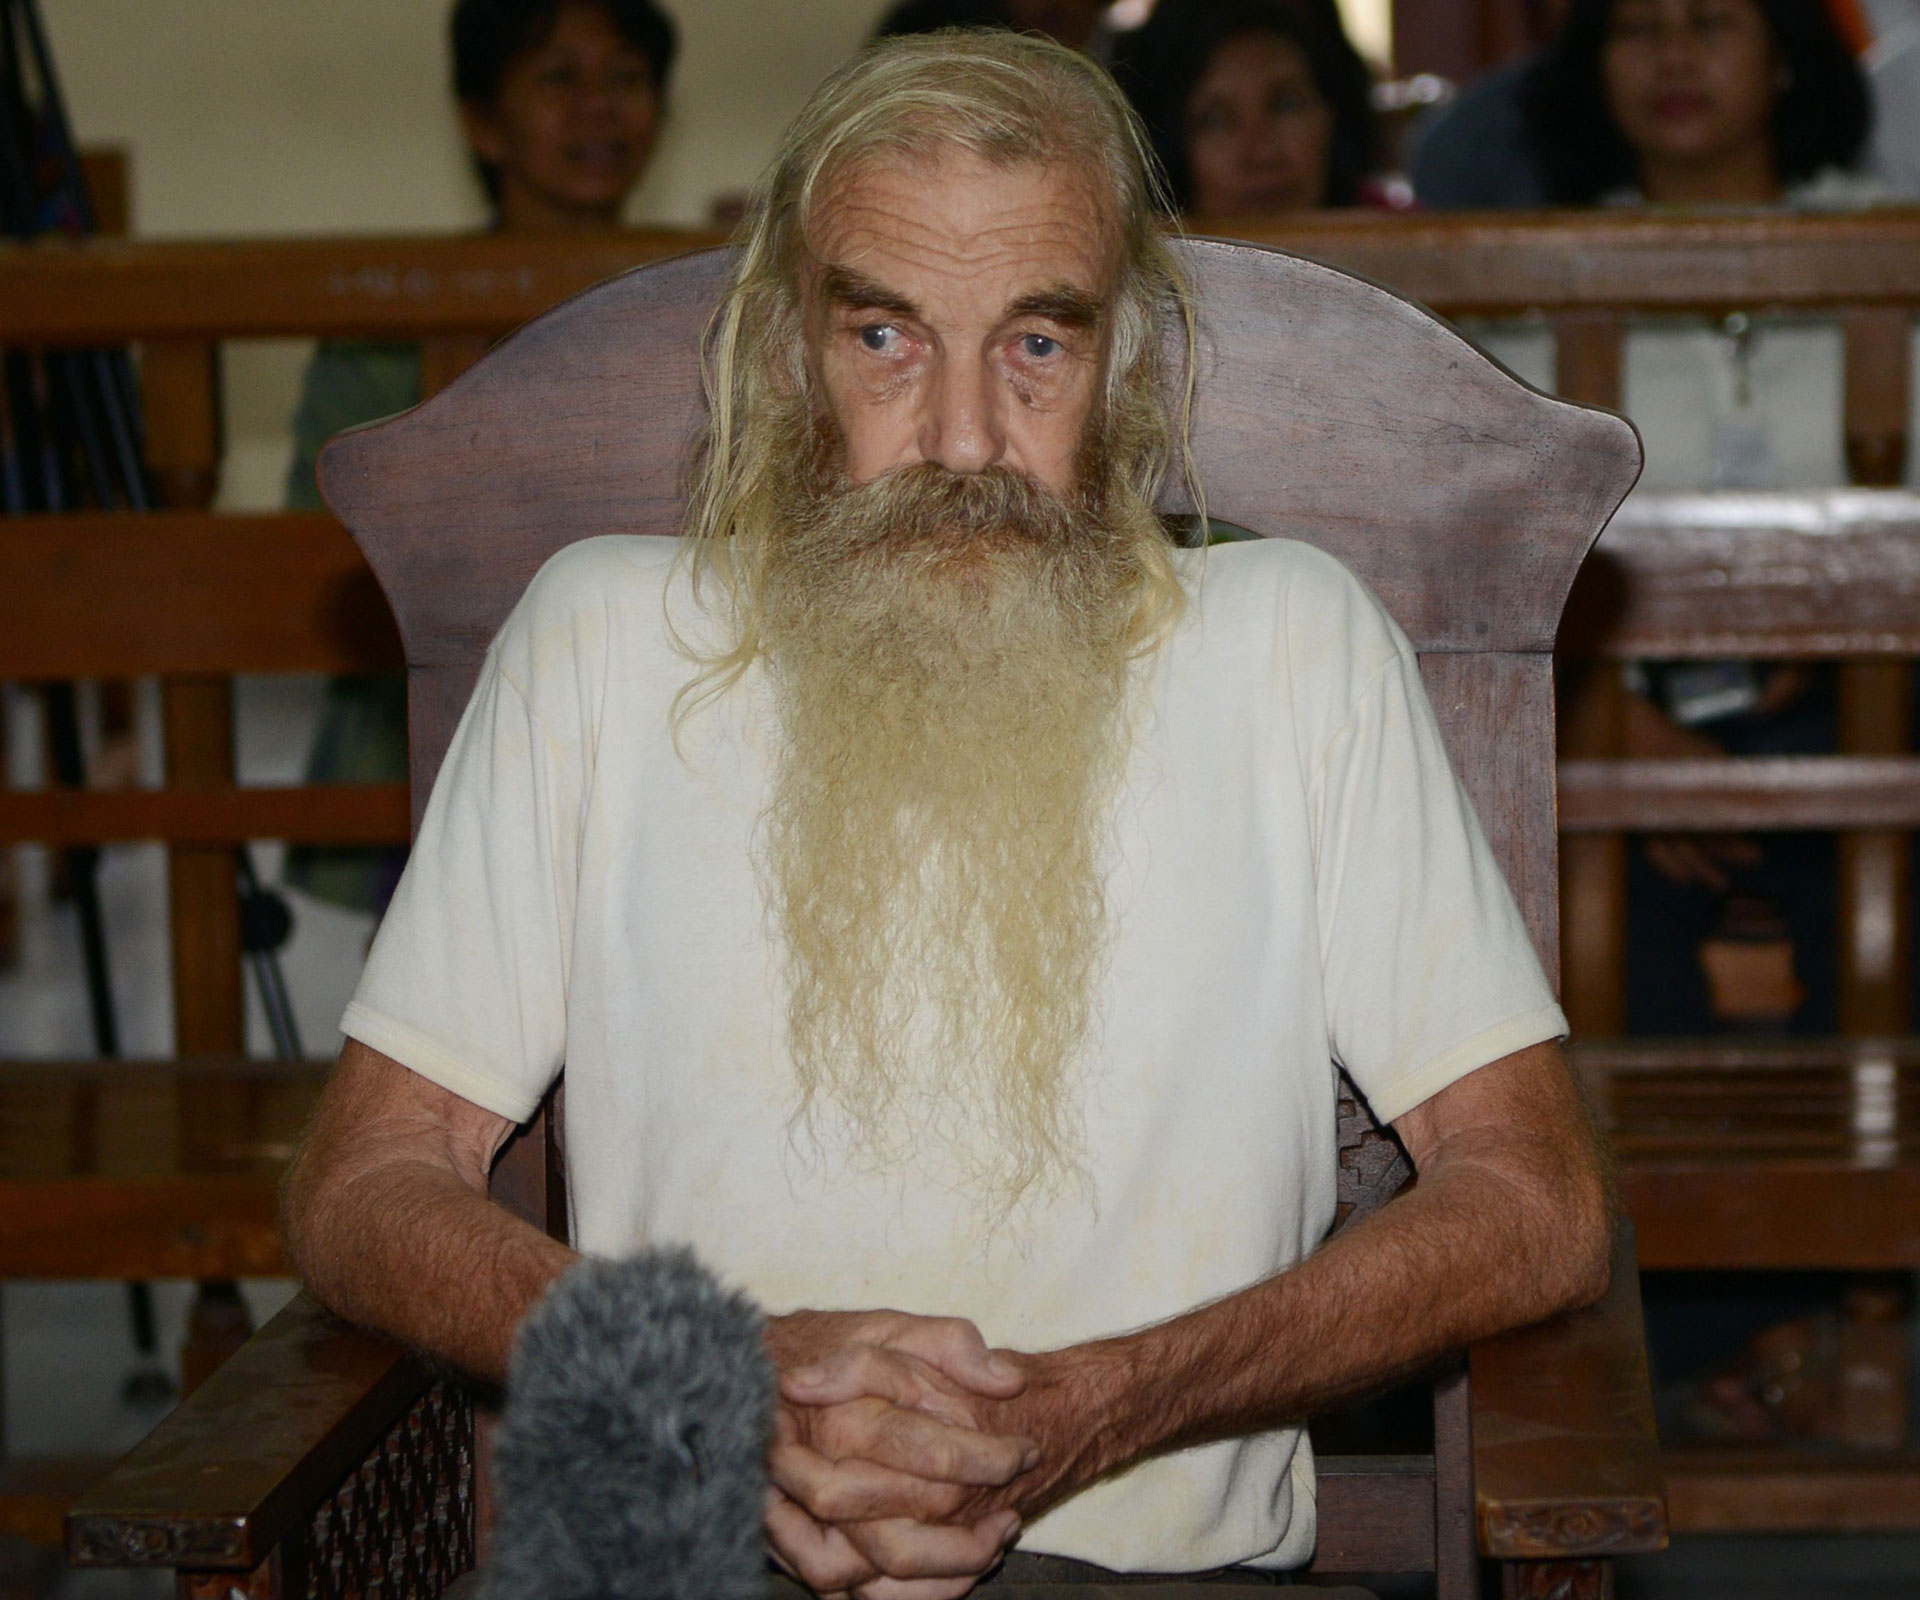 Bali: Australian paedophile Robert Ellis sentenced to 15 years’ jail